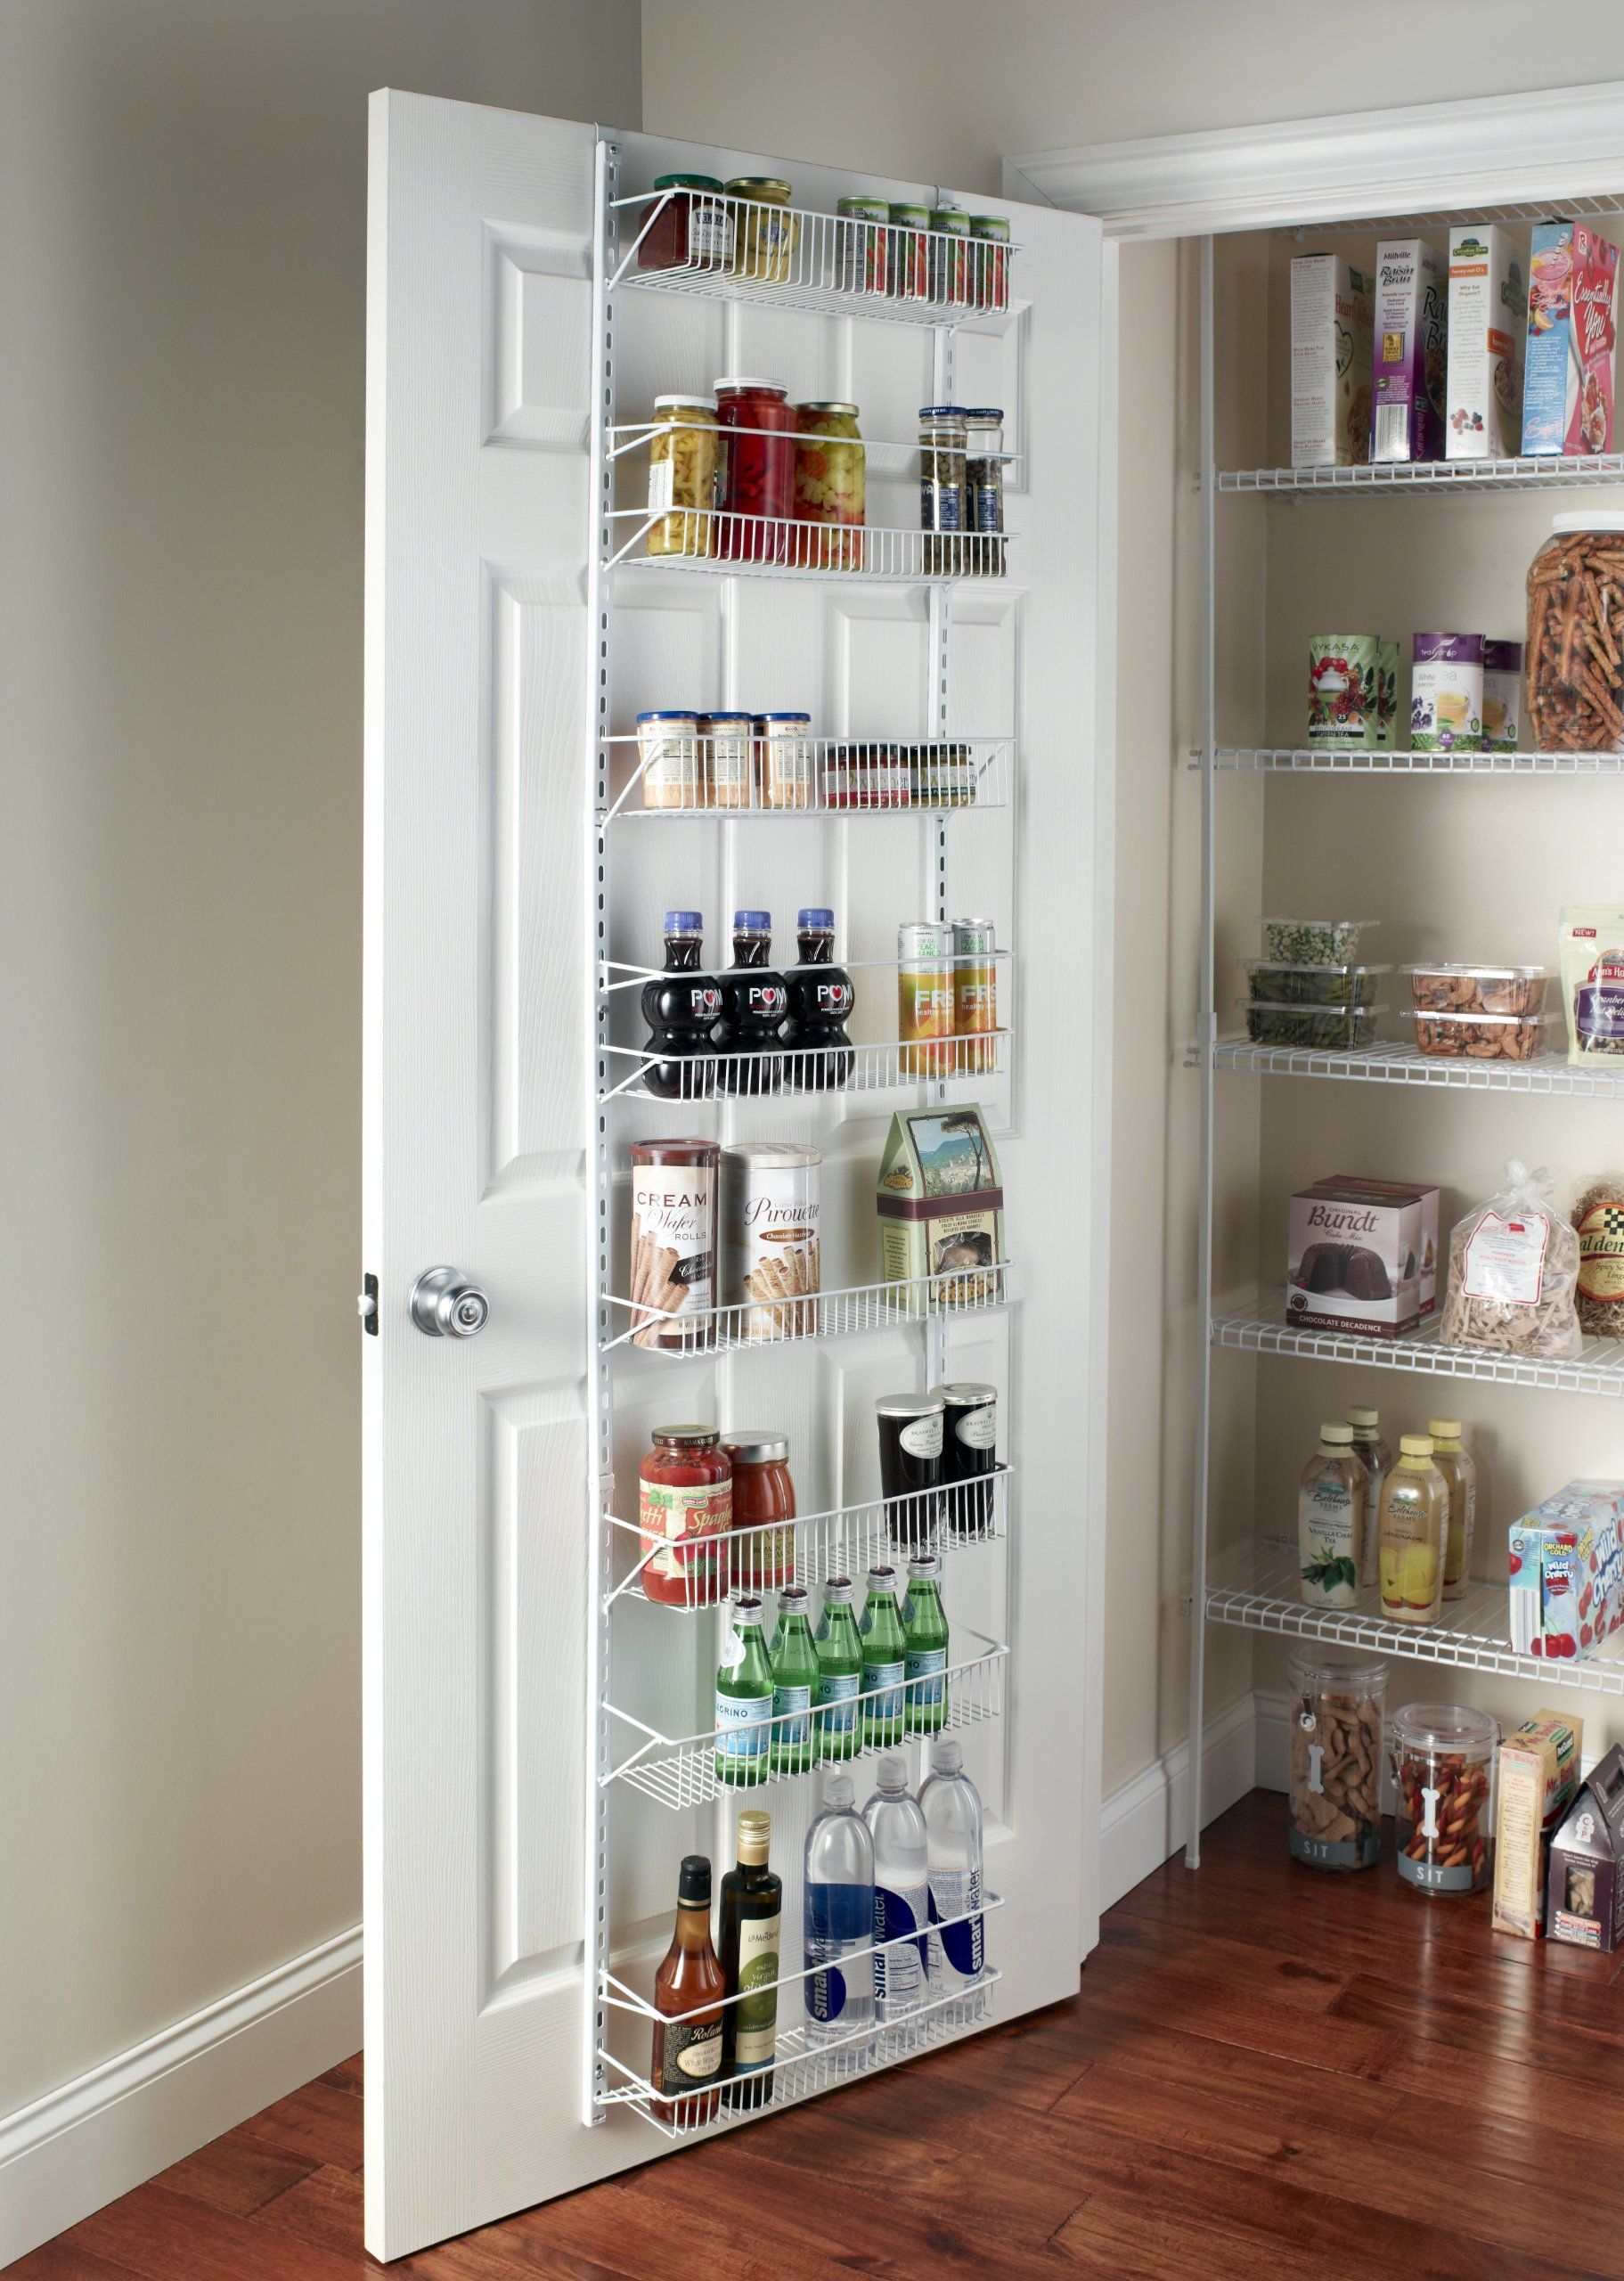 Details about   6 Tiers Wall Mount Kitchen Door Cupboard Spice Jar Rack Pantry Bottle Storage US 